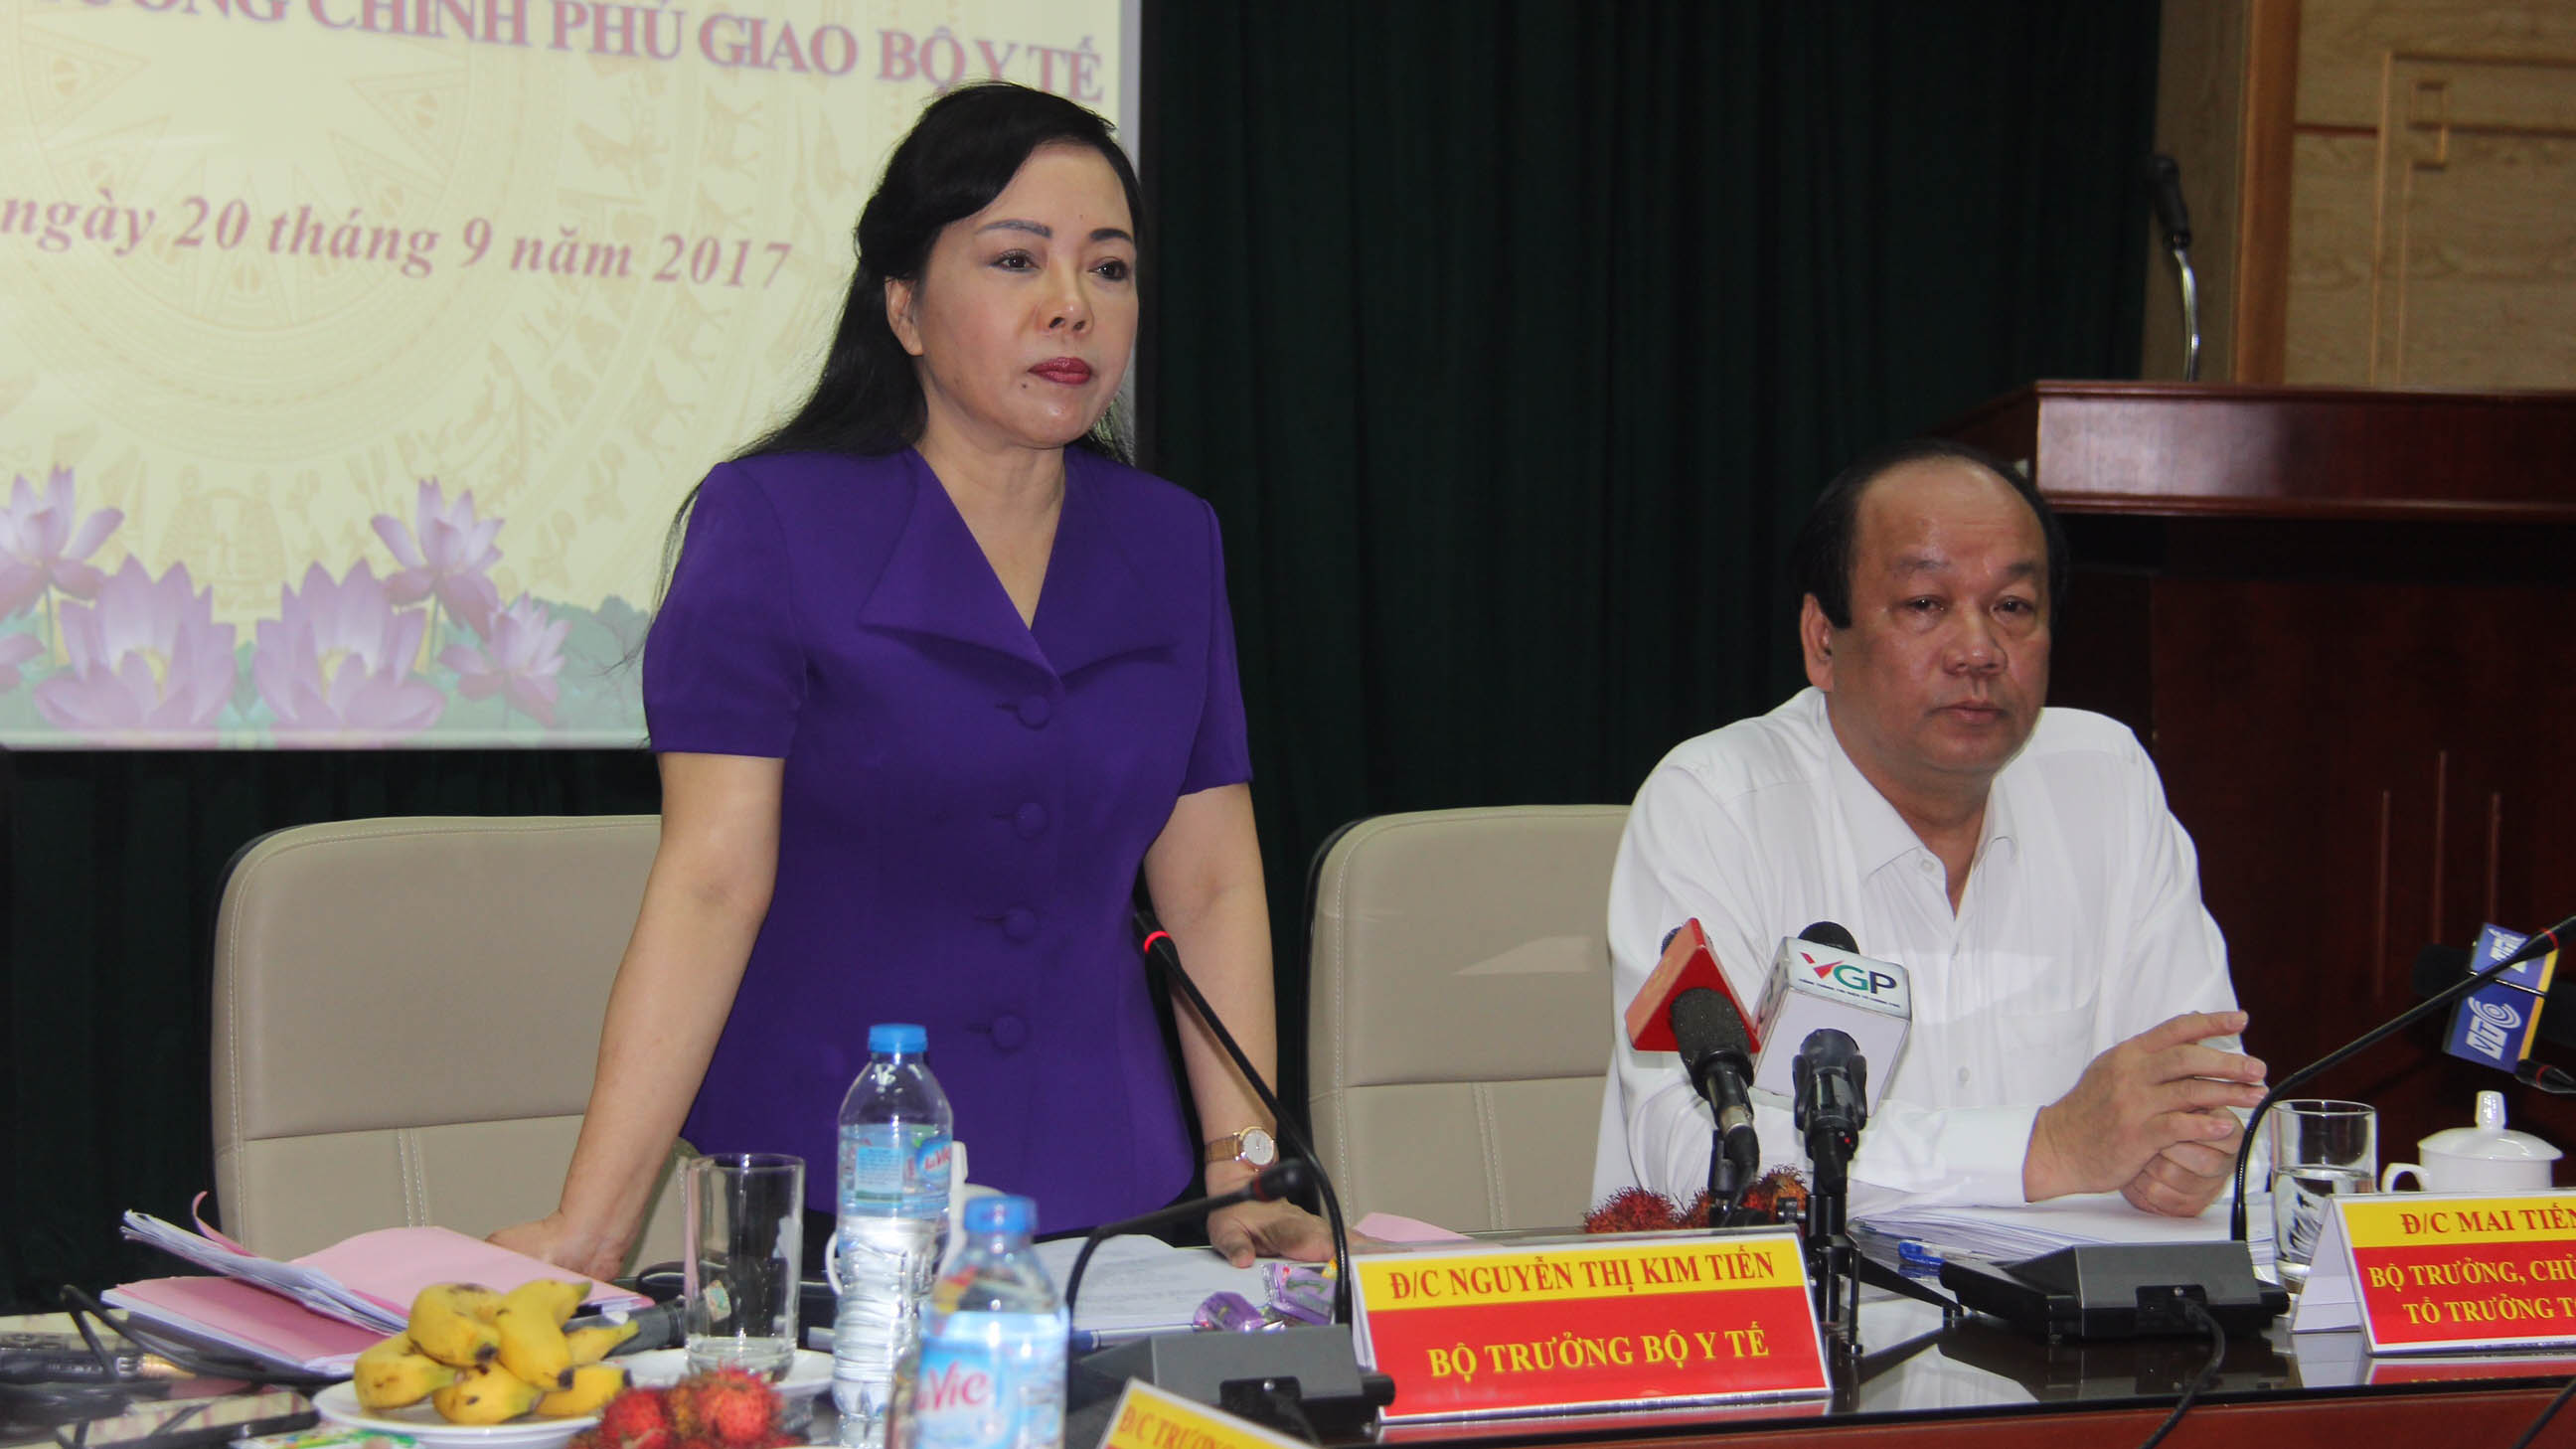 ​Vietnamese doctor fined for slandering health minister on Facebook